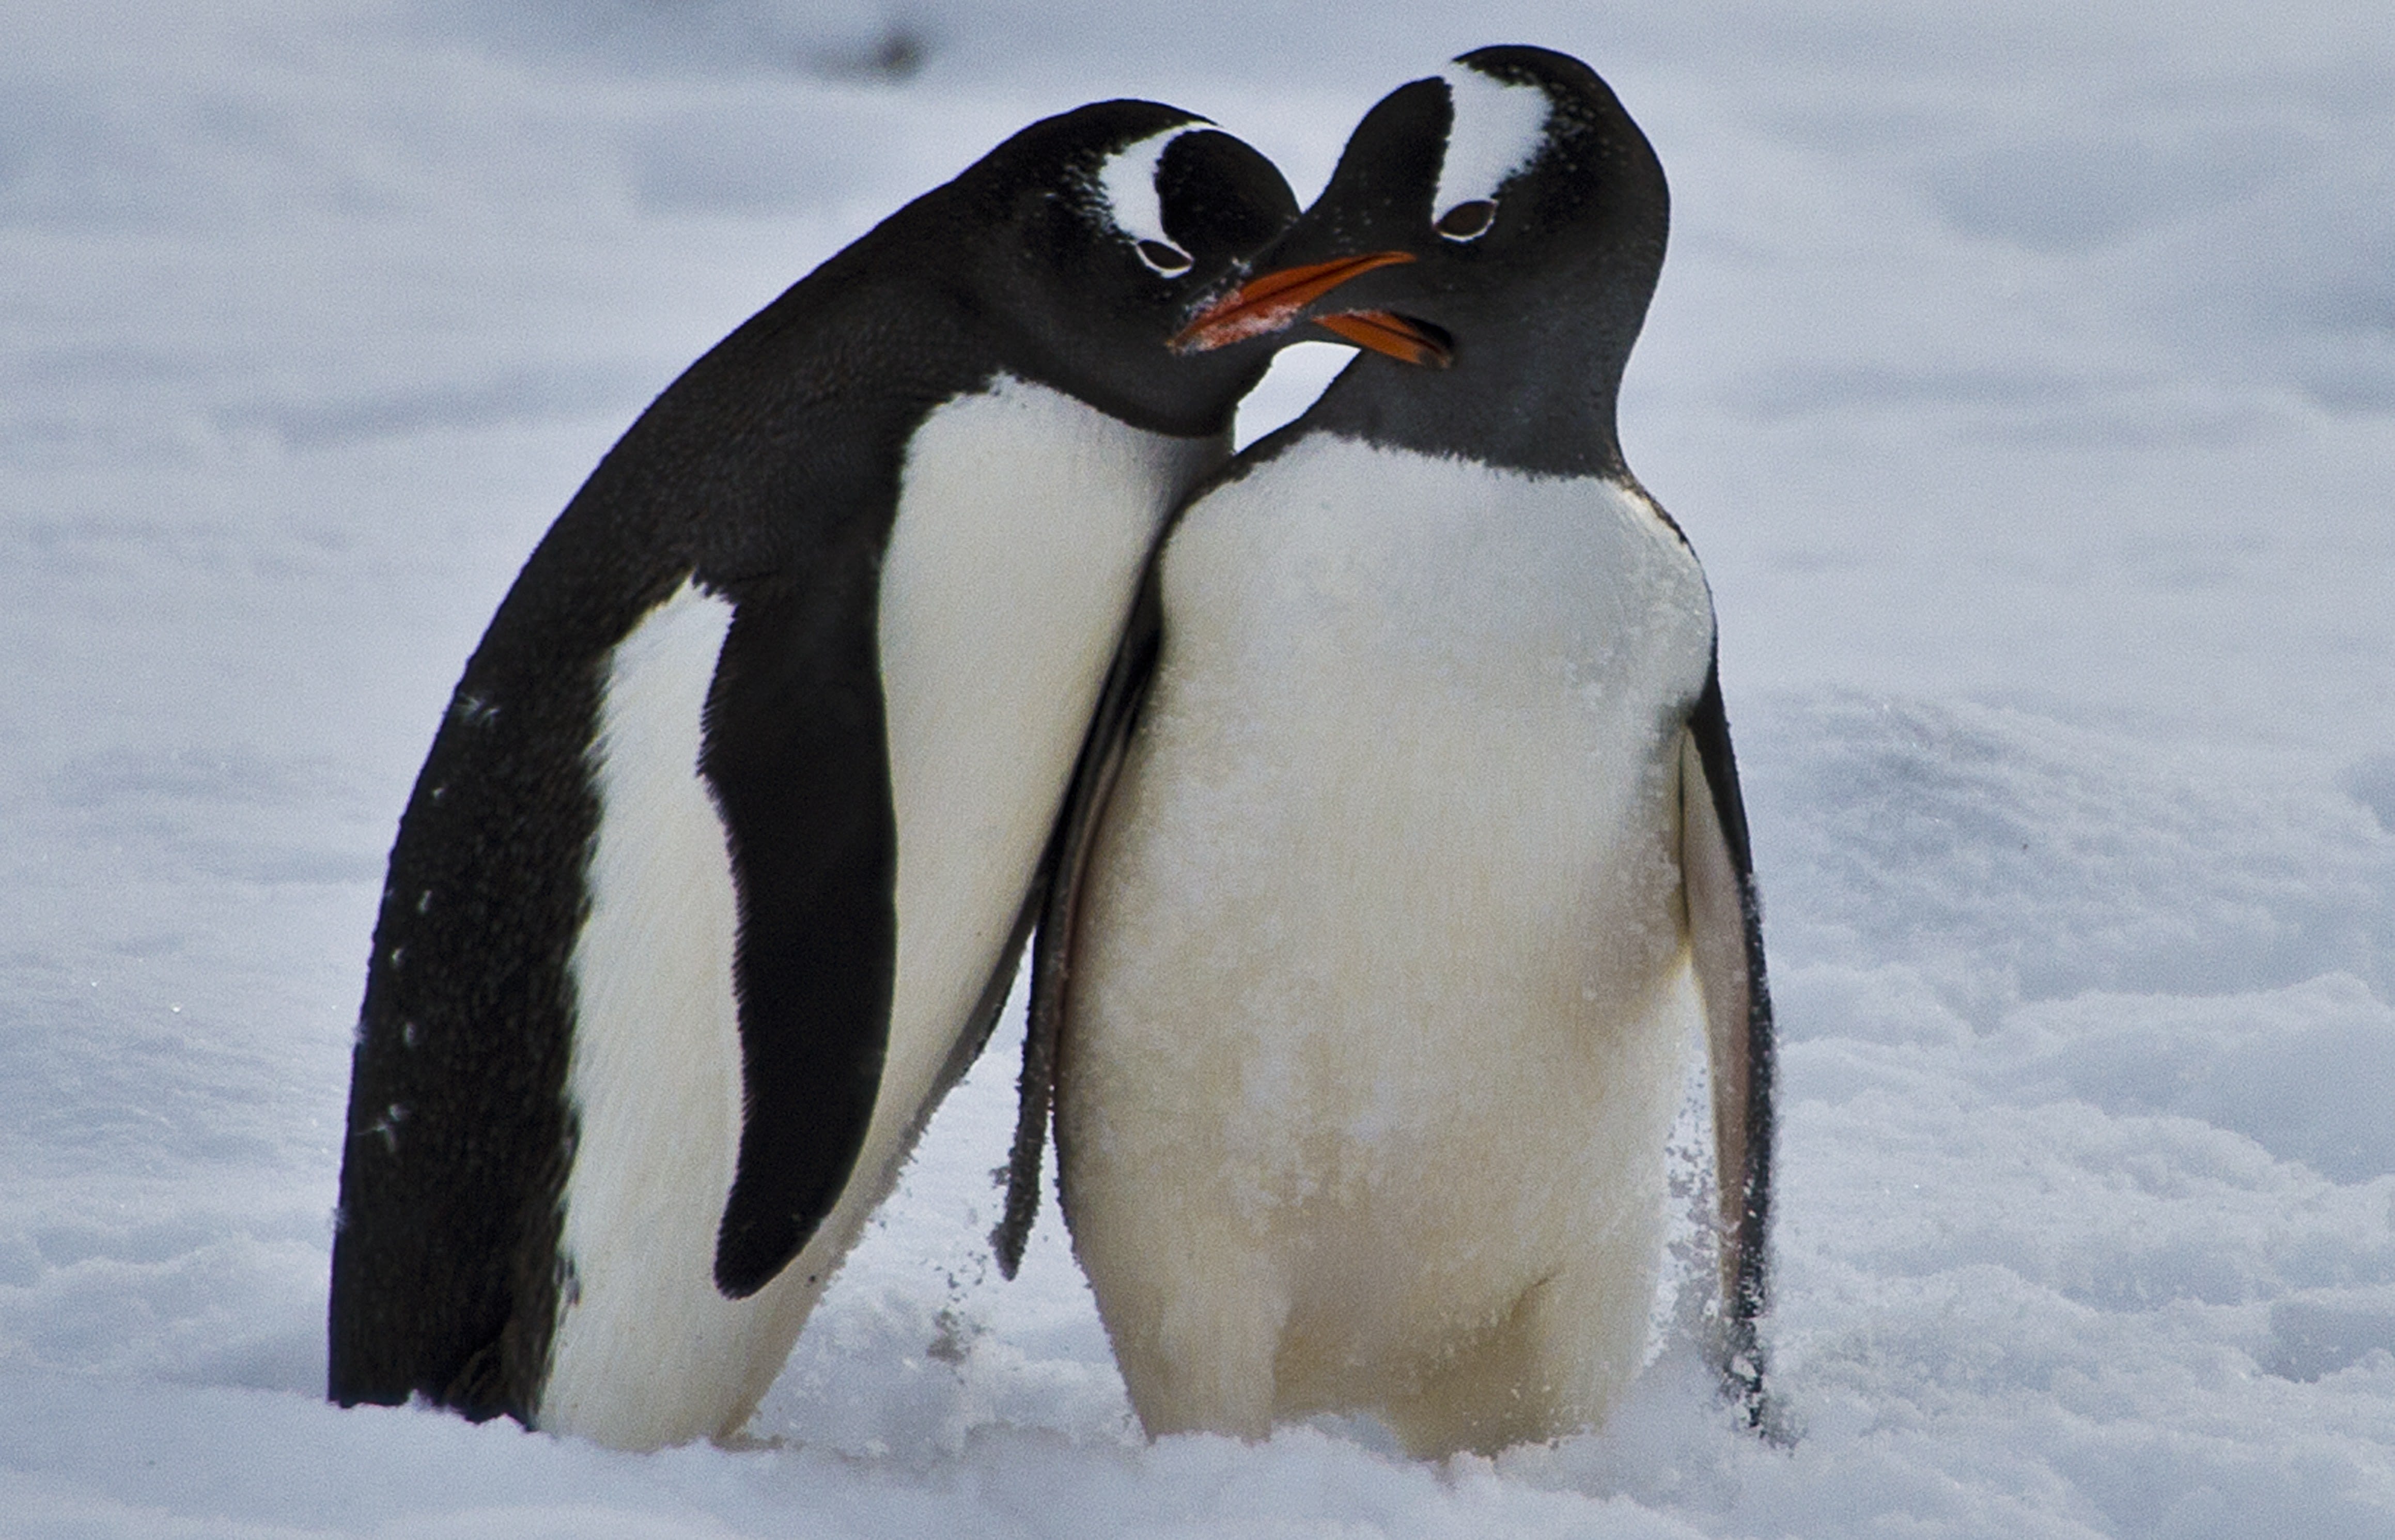 https://media.cnn.com/api/v1/images/stellar/prod/150210135131-penguins-antarctica-tease.jpg?q=w_4636,h_2981,x_0,y_0,c_fill